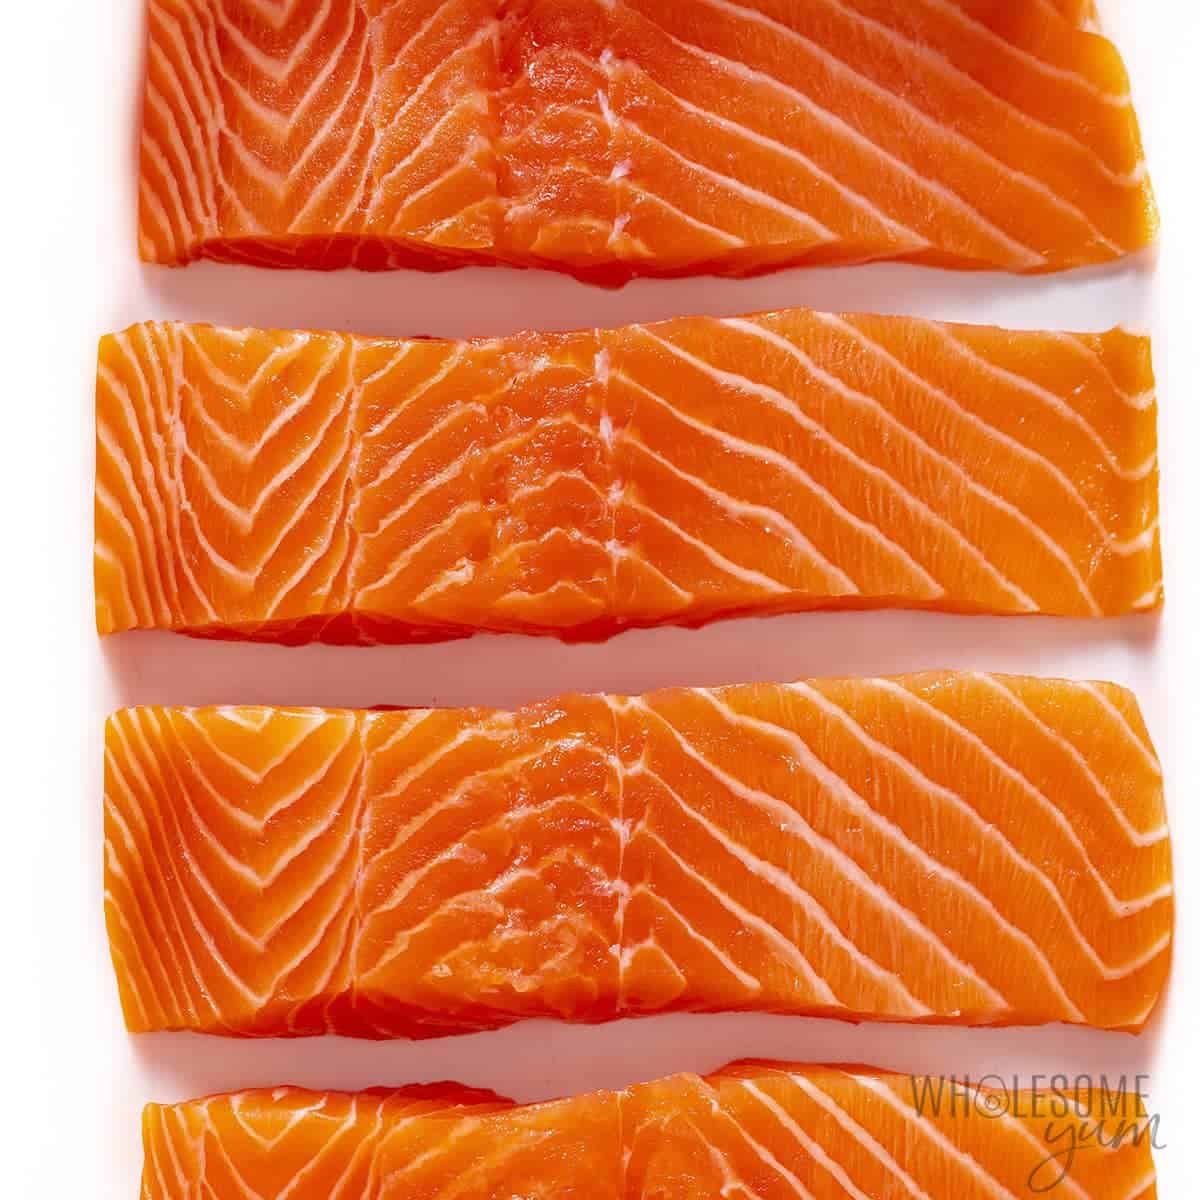 Is salmon keto? This raw, fresh salmon is naturally keto friendly.